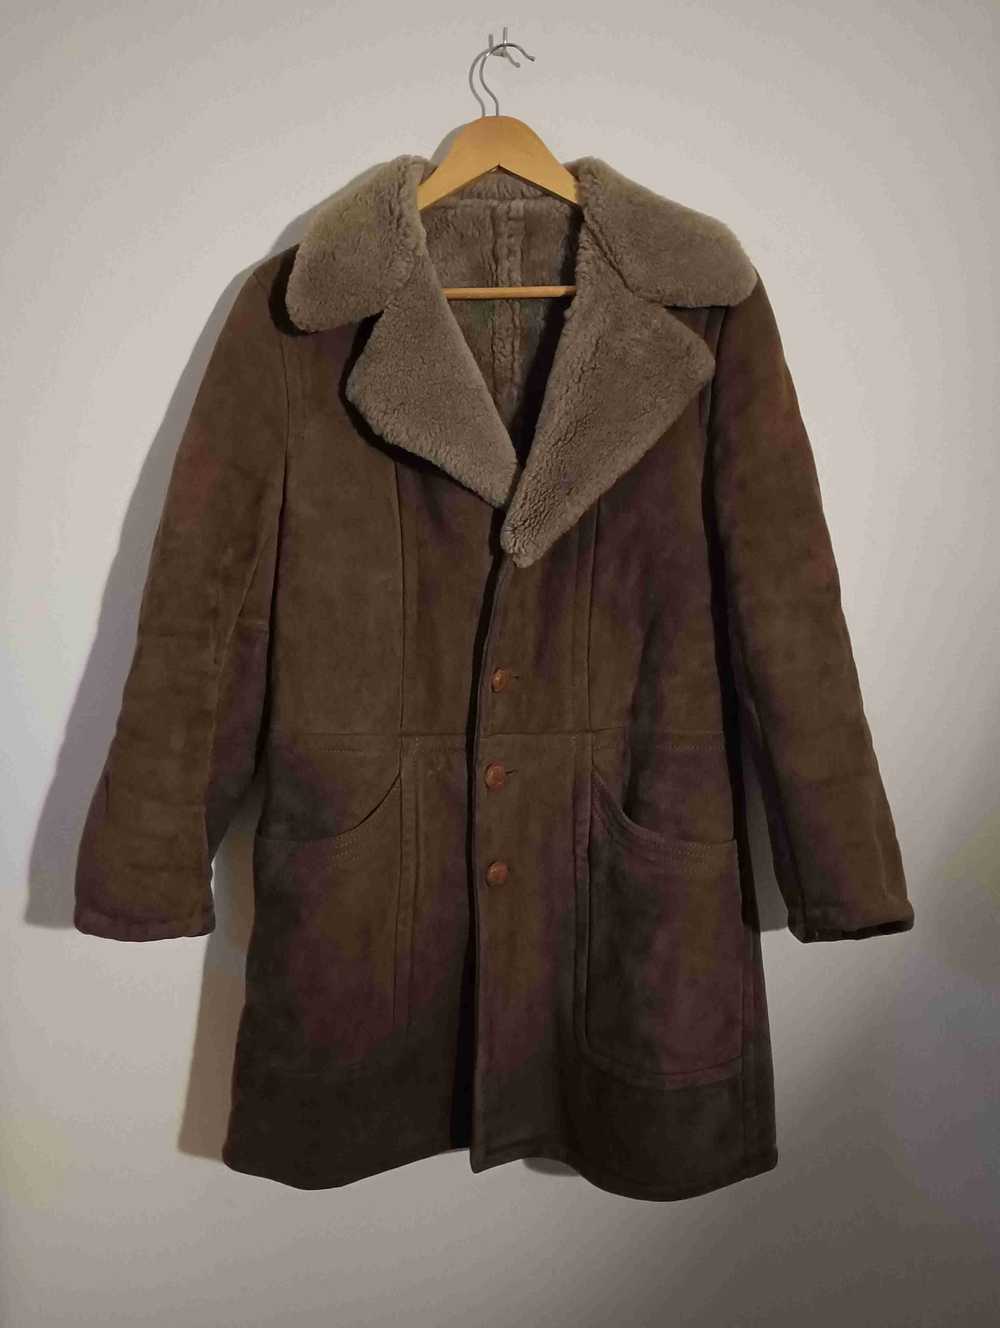 Shearling coat - Sheepskin coat from the 70s - image 4